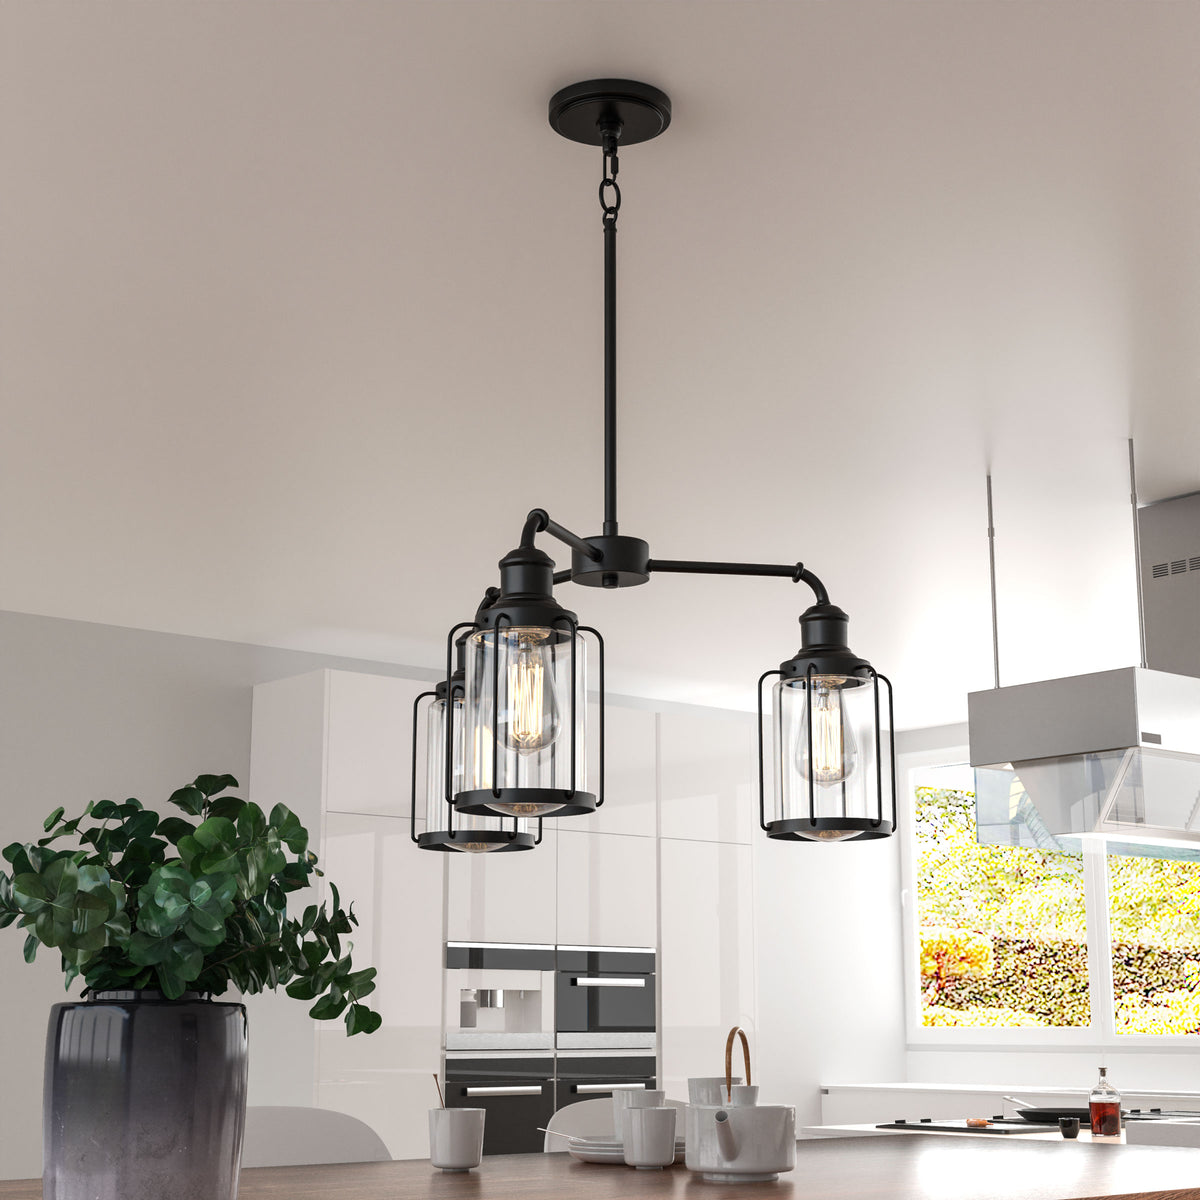 3-Light Birdcage Chandelier Lighting Fixture, Kitchen Island Light Fix ...